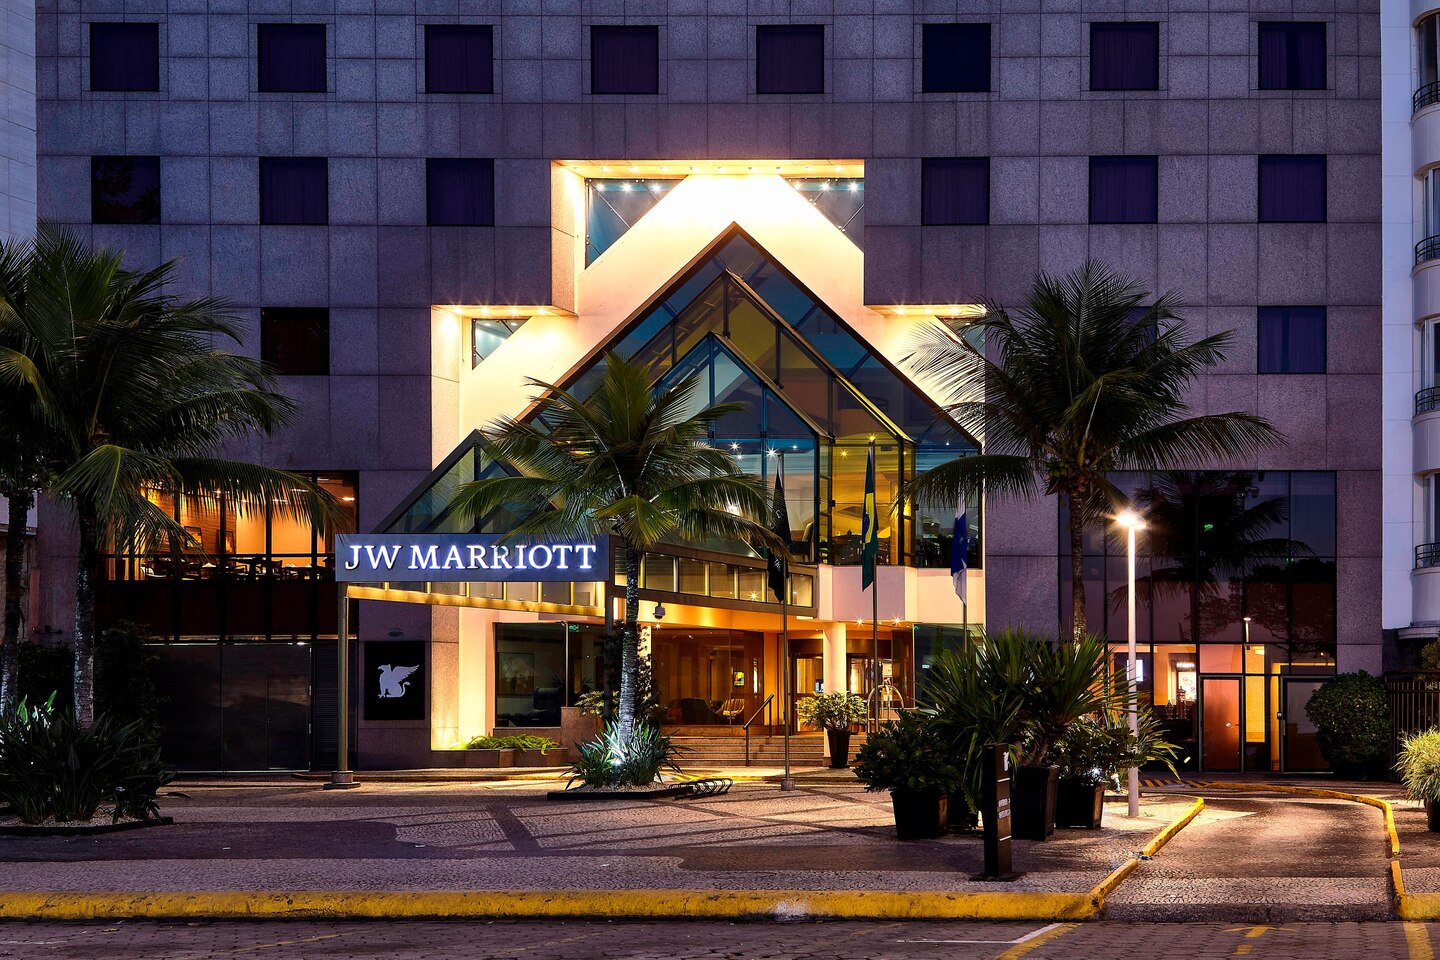 JW Marriott Hotel